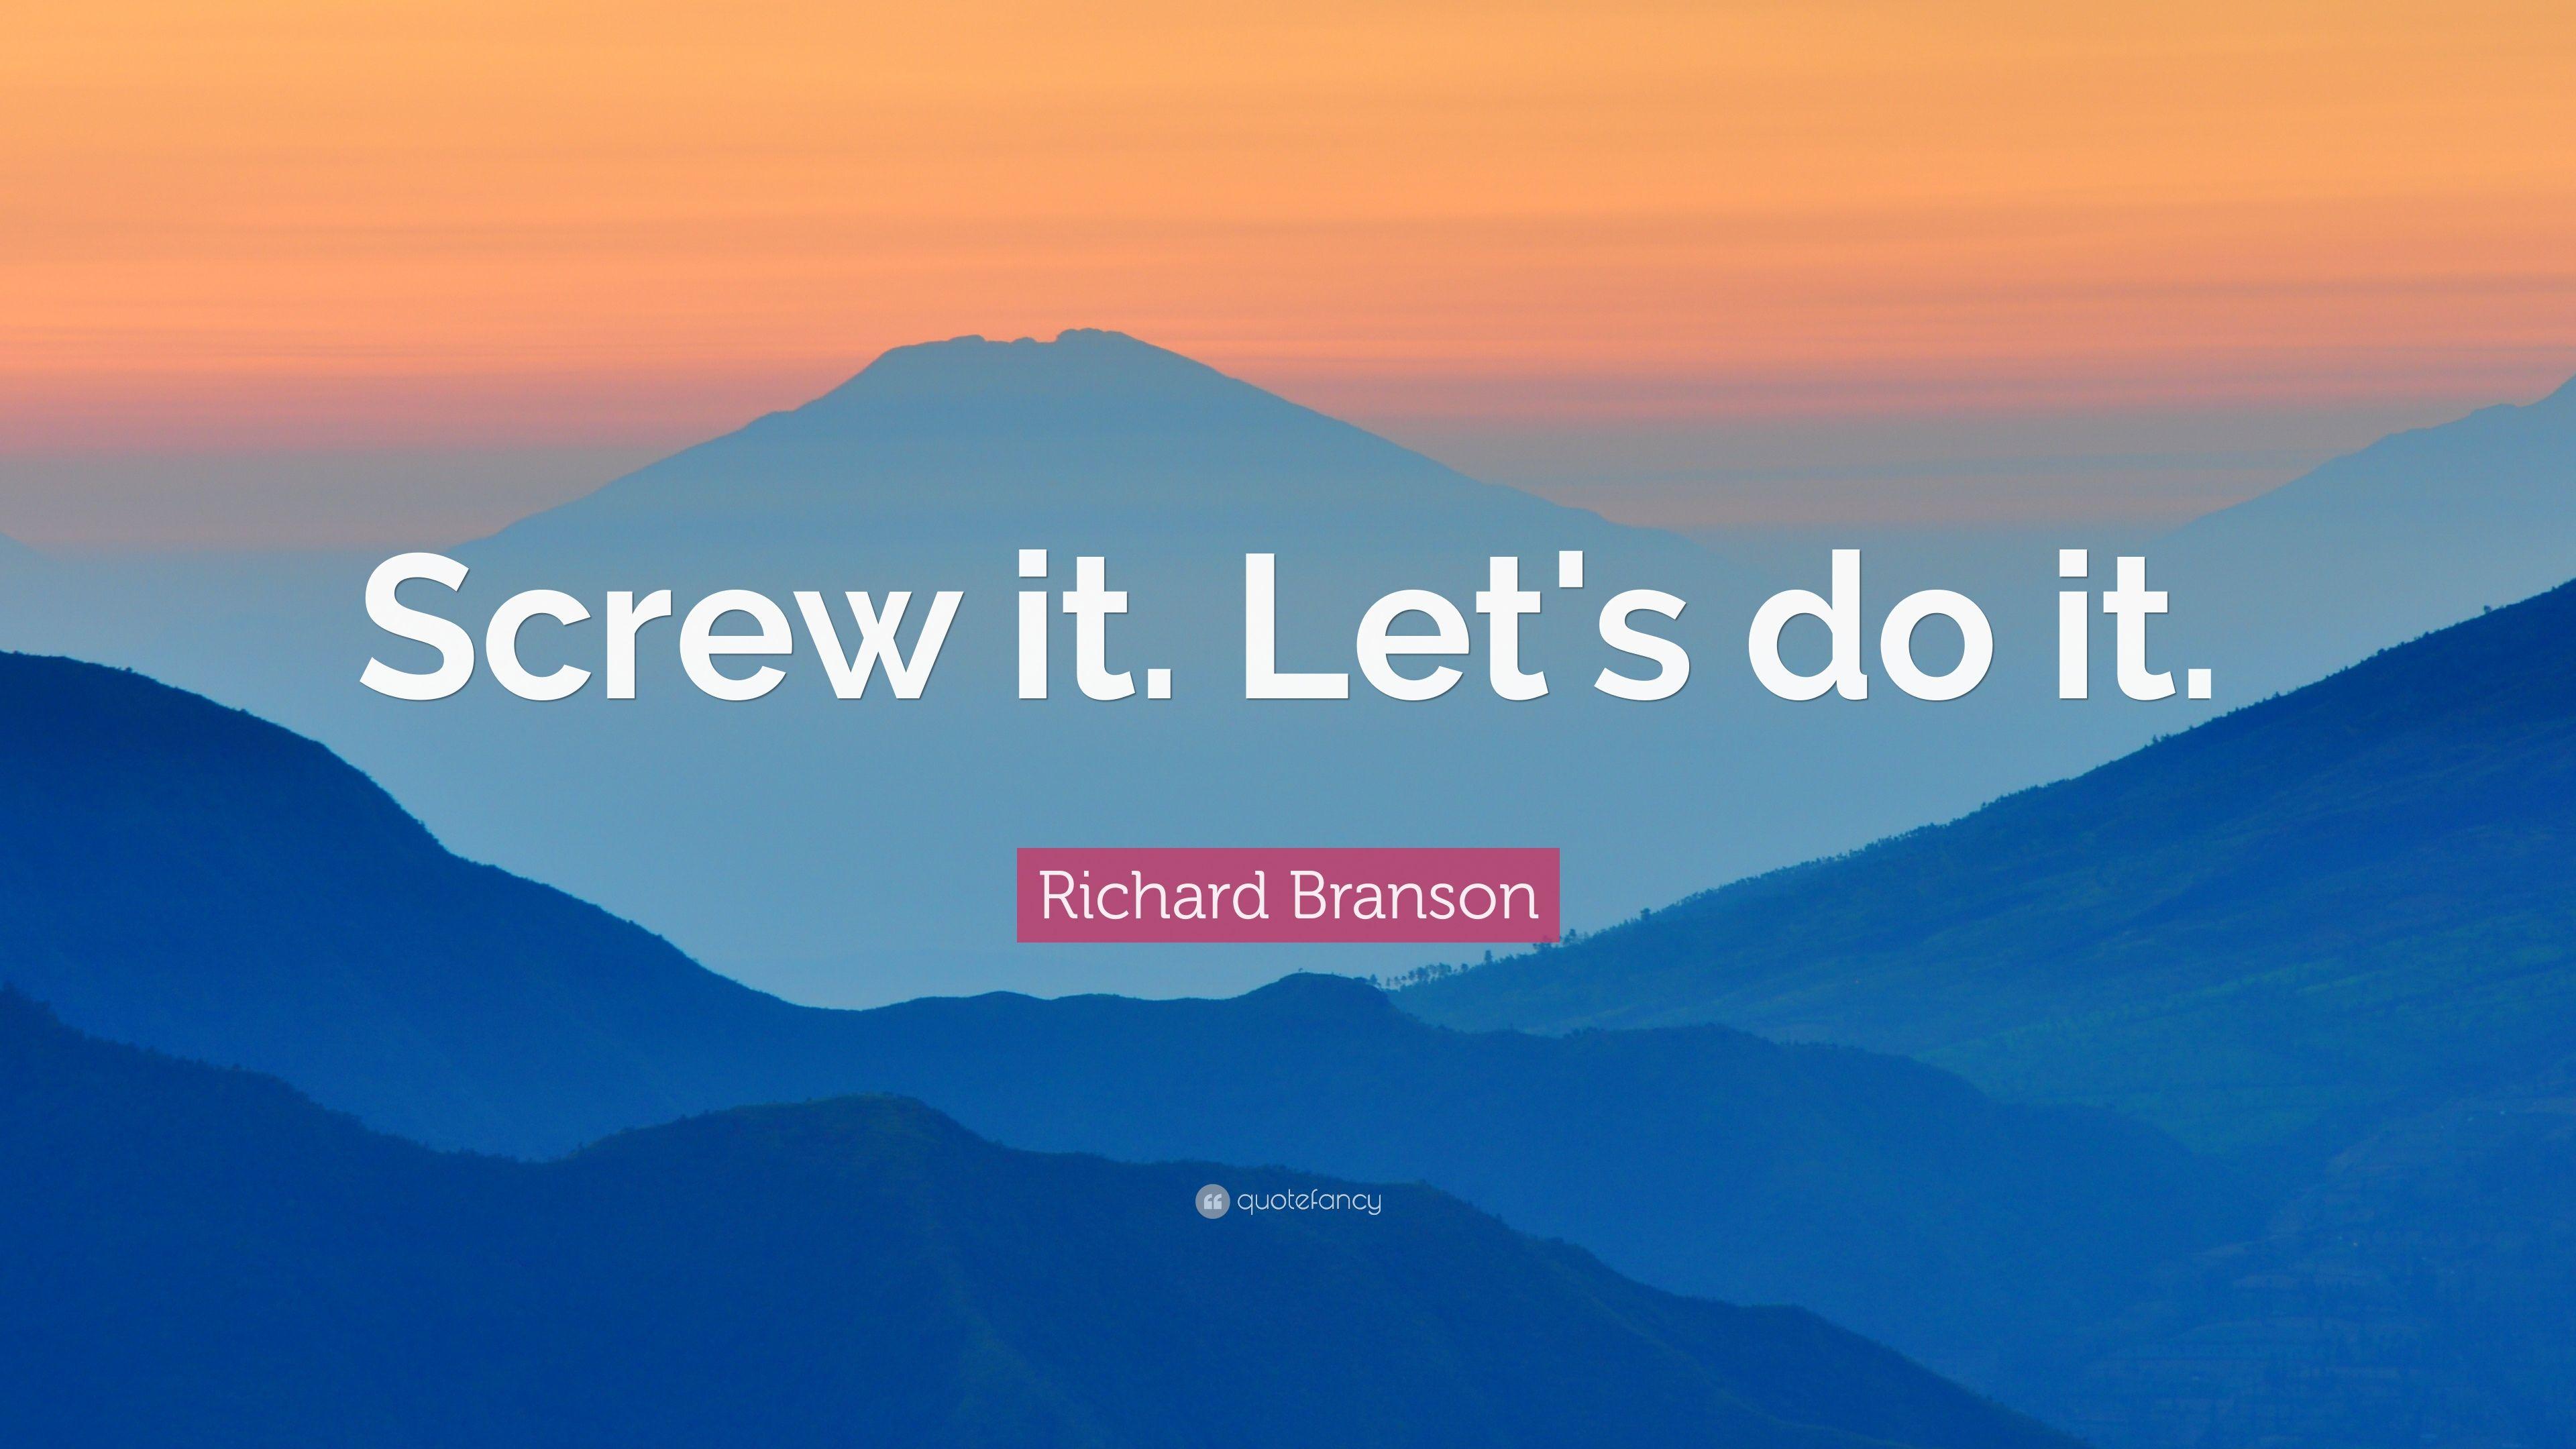 Richard Branson Quote: “Screw it. Let's do it.” 22 wallpaper